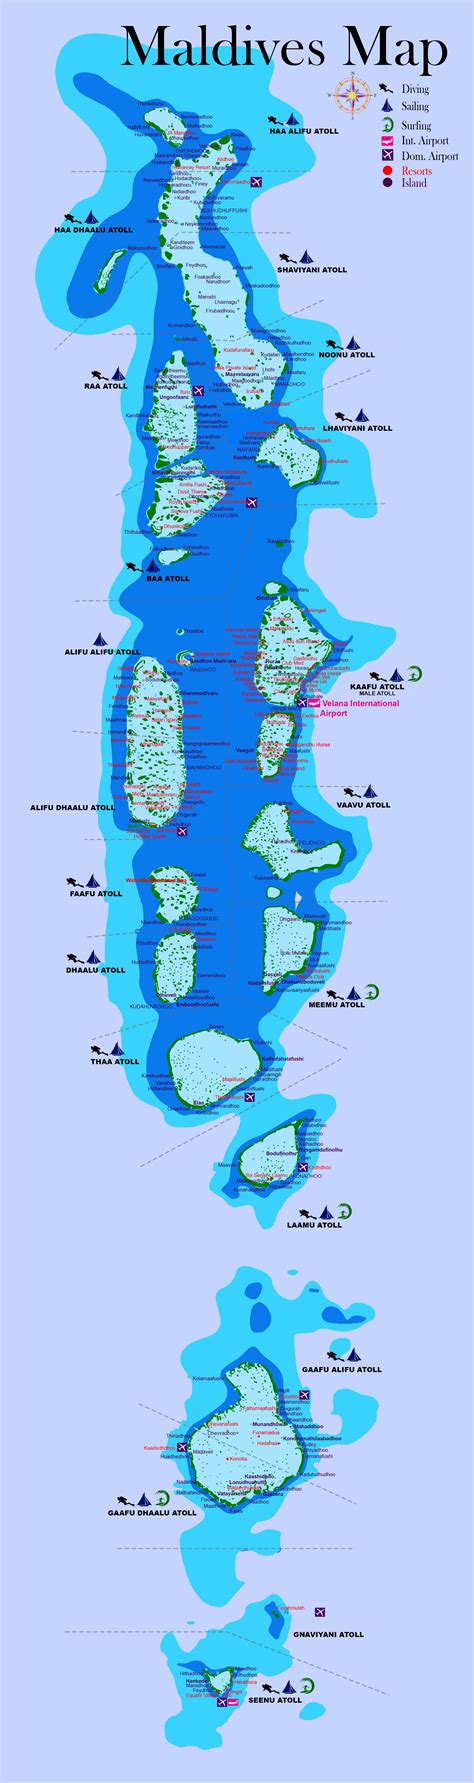 Maldives Map Full Maldives Island Maldives Travel Guide Maldives